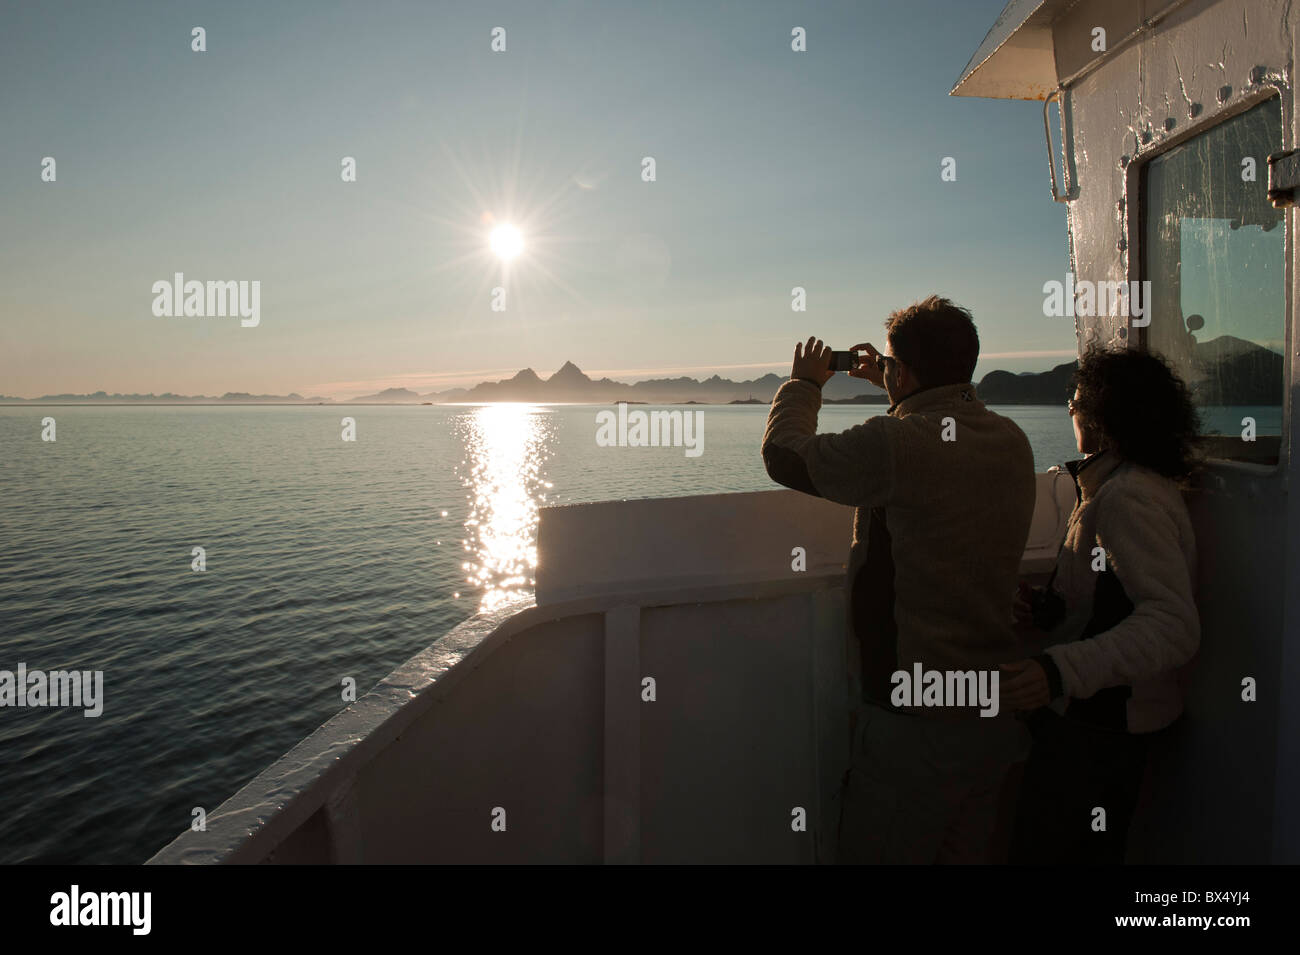 Passengers on a ferry taking photos Stock Photo